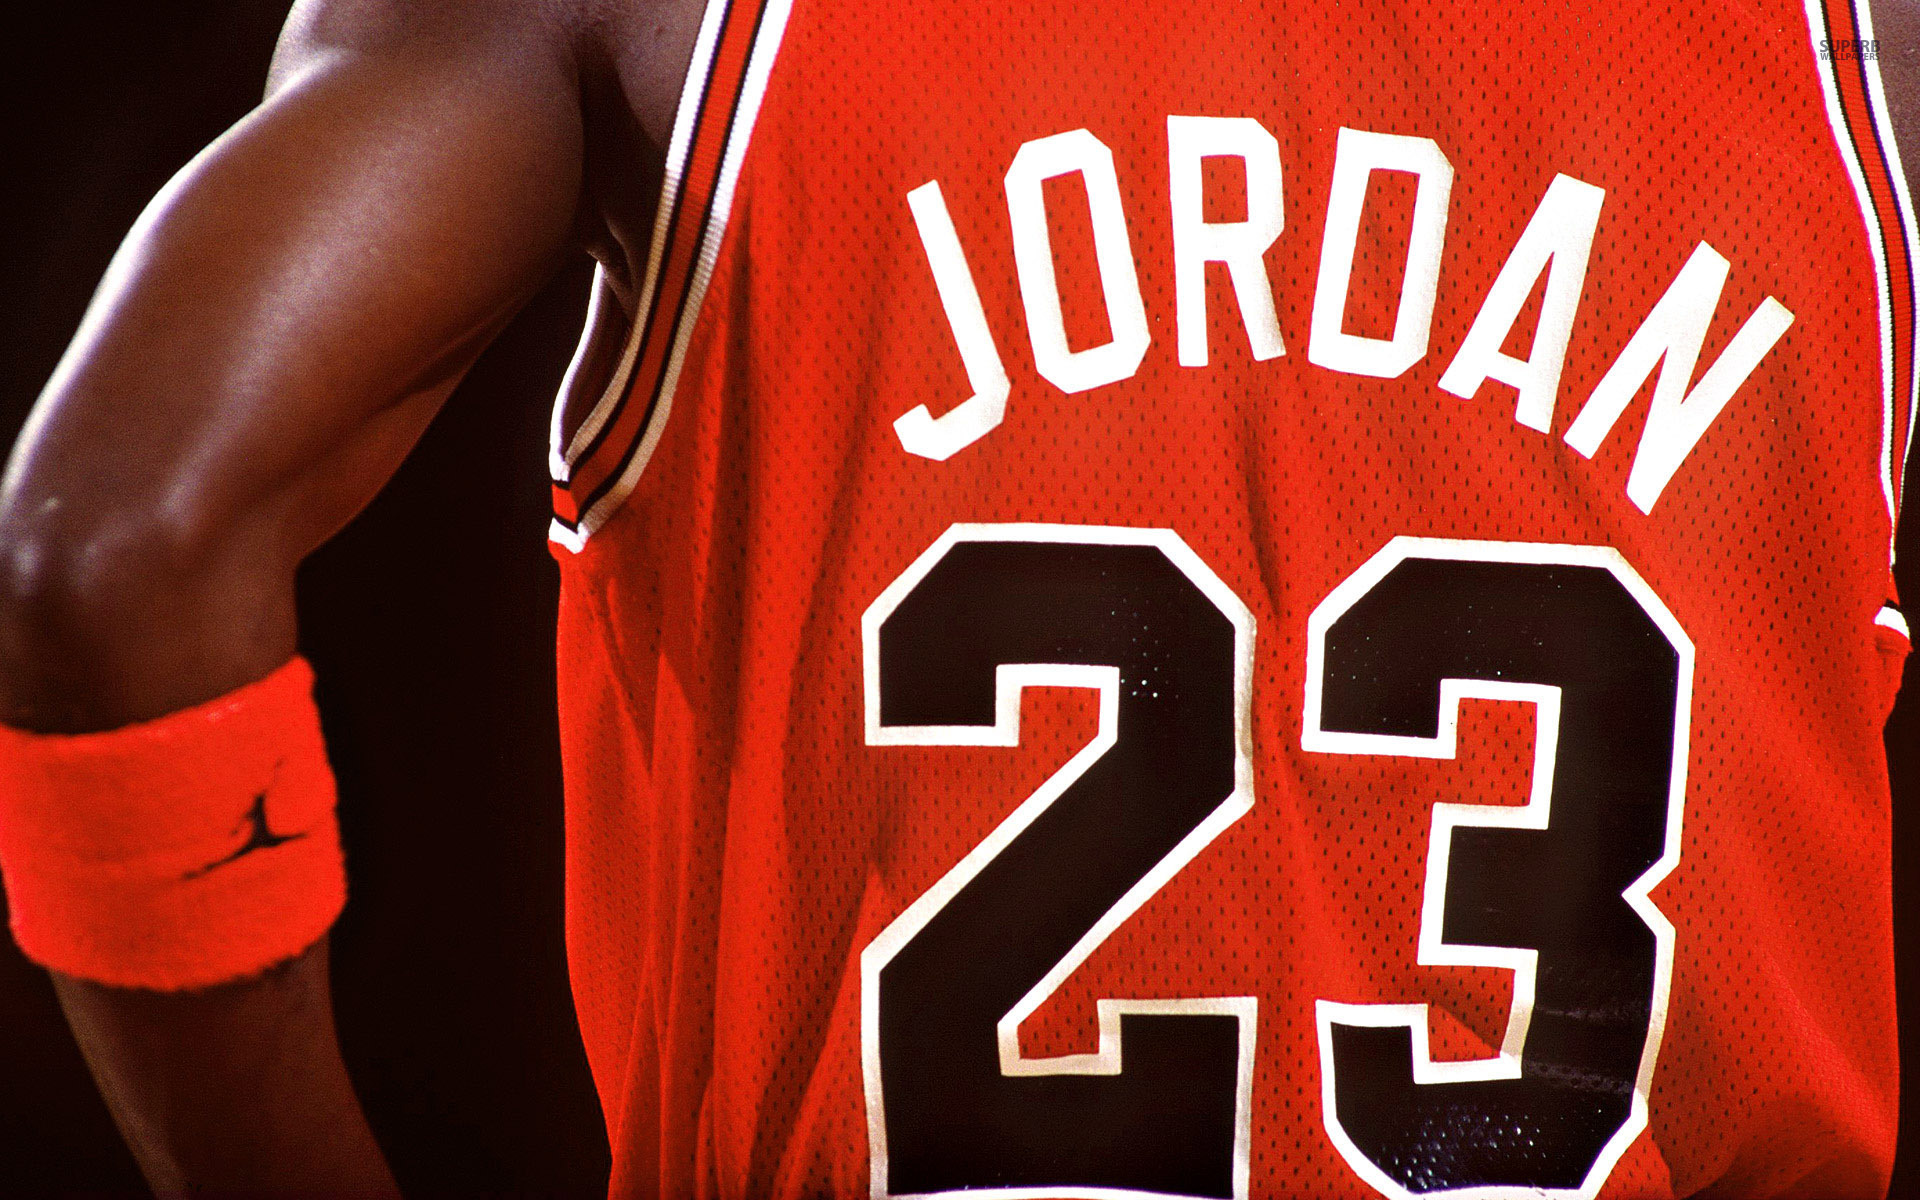 Michael Jordan Jersey Wallpaper High Resolution Full Size